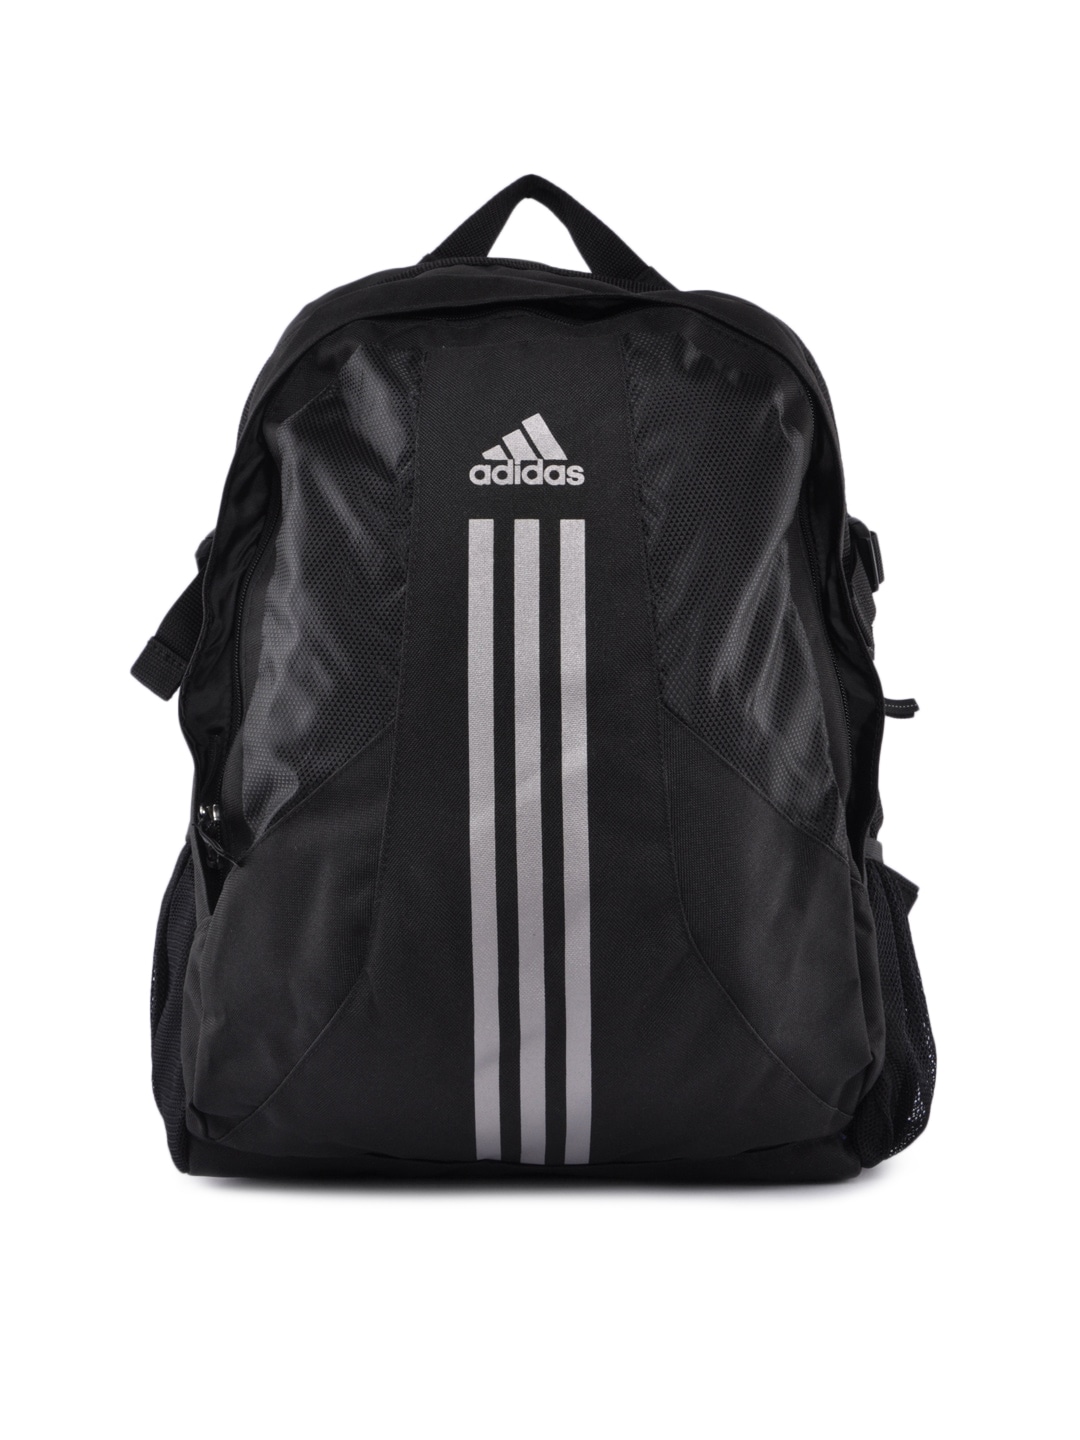 ADIDAS Unisex Black Casual Backpack